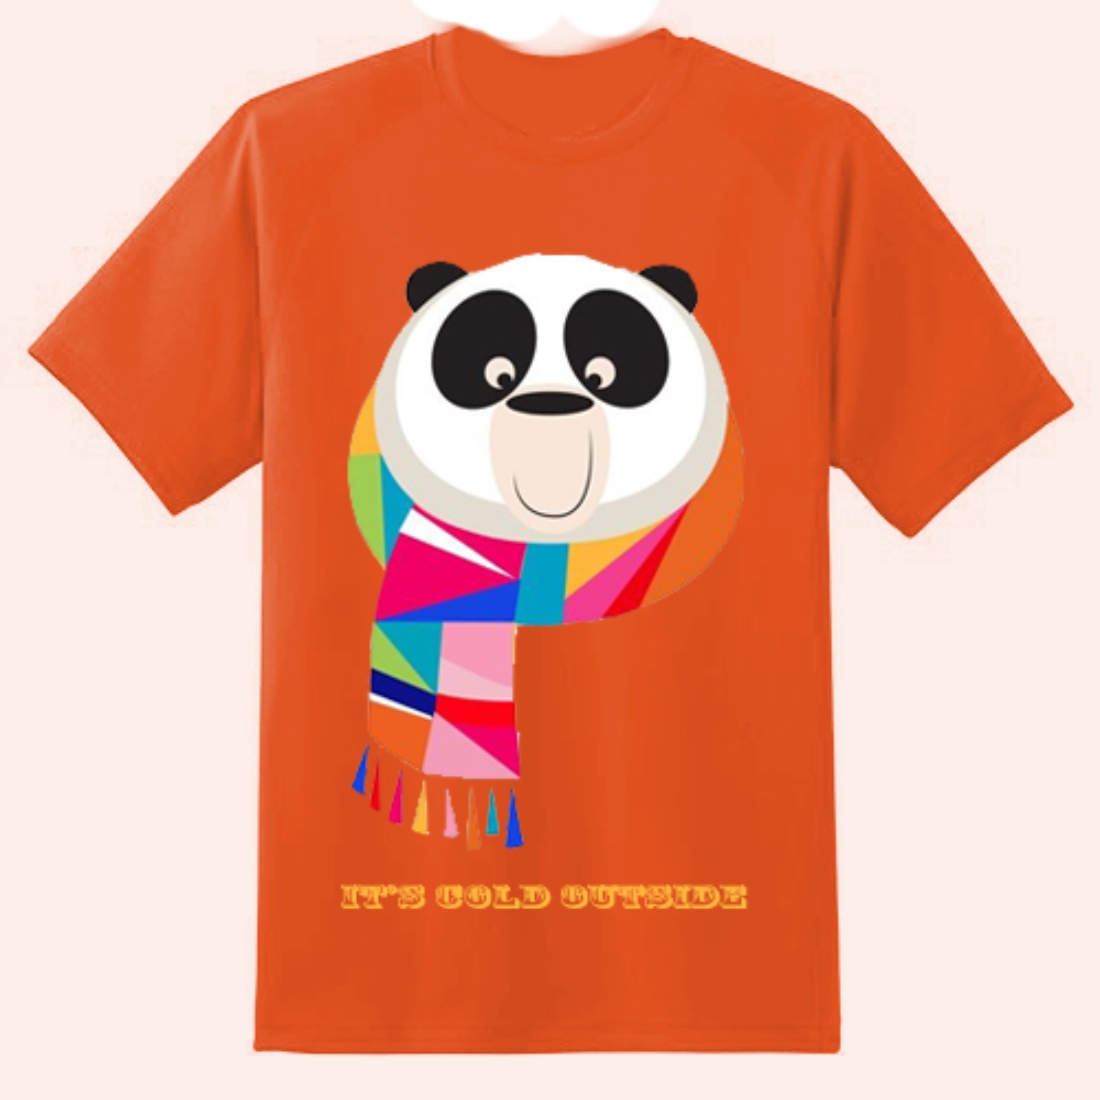 Cute Panda T shirt's Desings in 7 different Colors preview image.